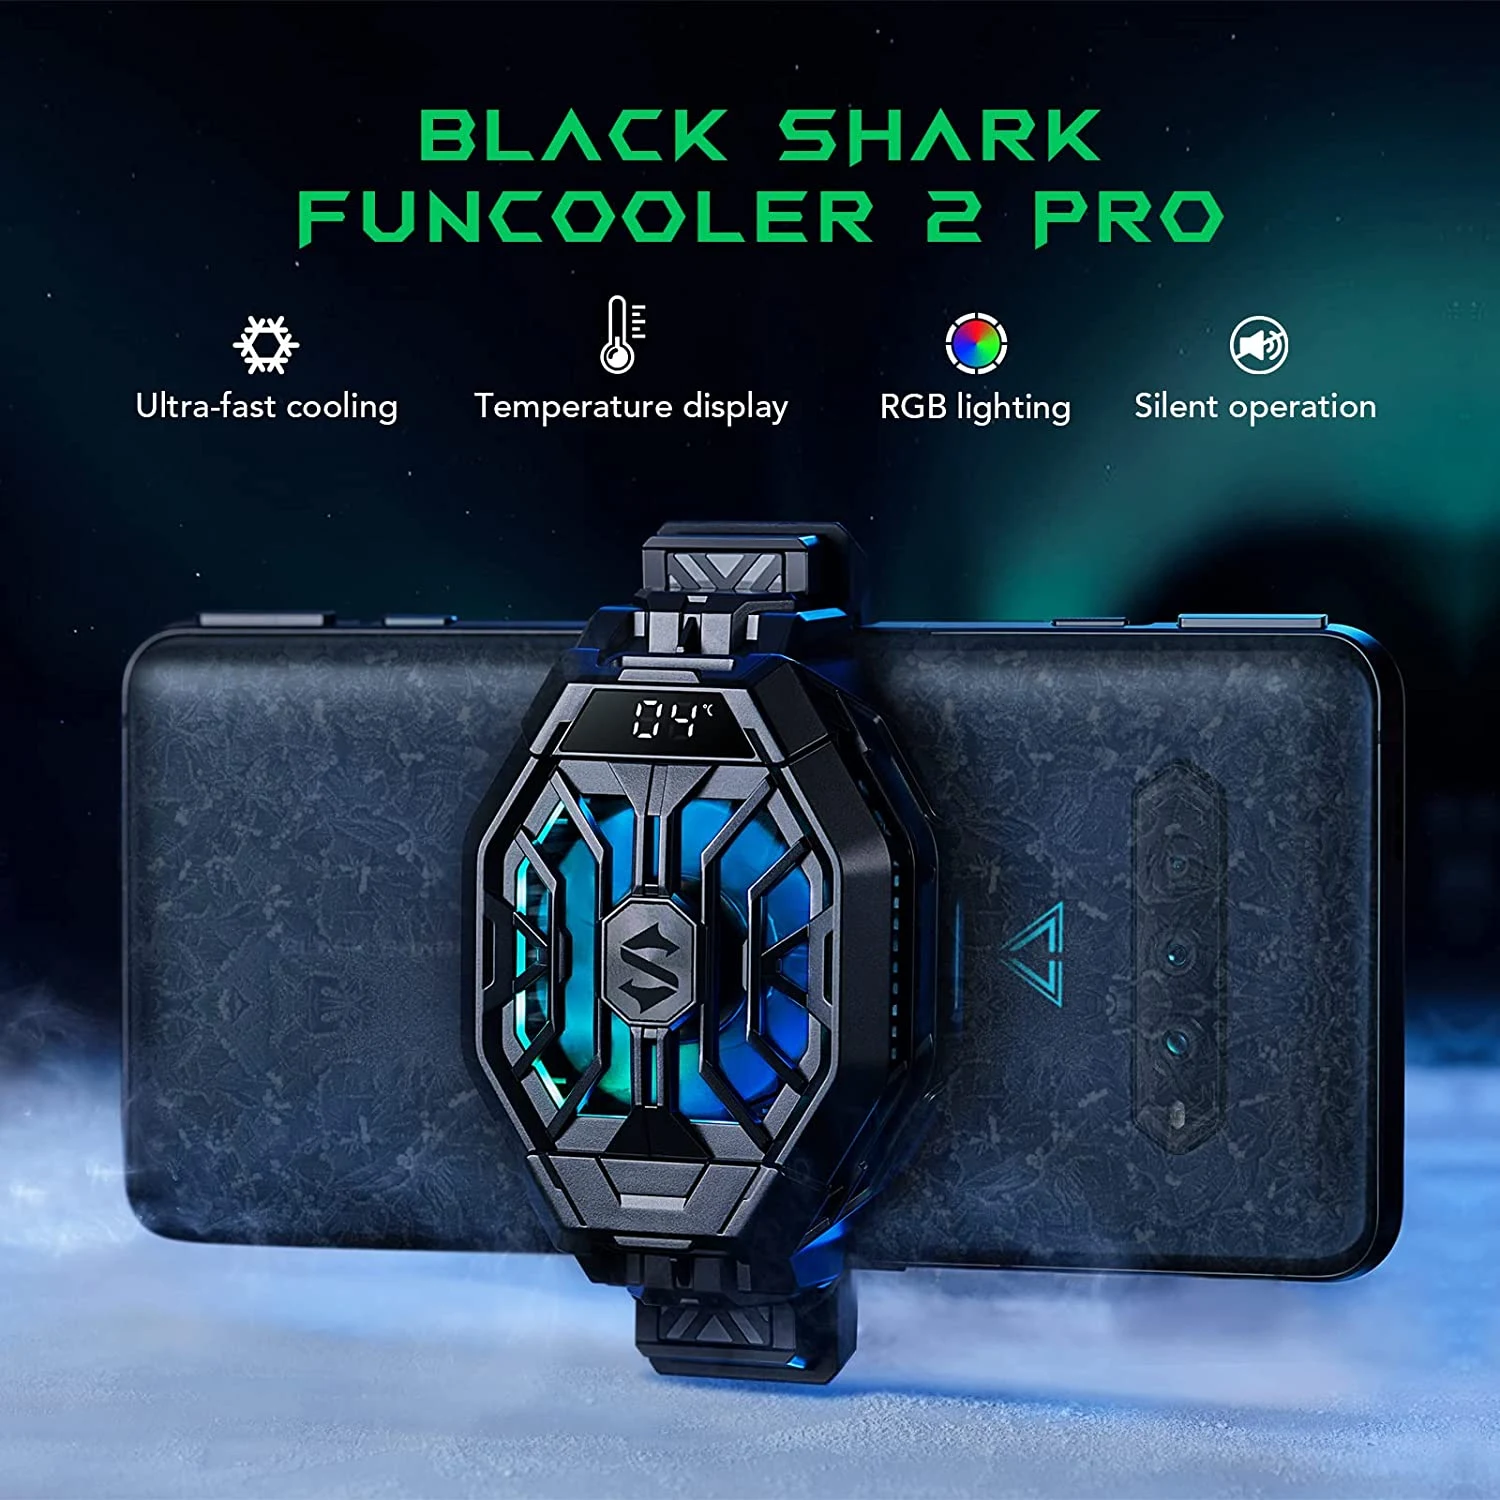 Black Shark FunCooler 2 Pro